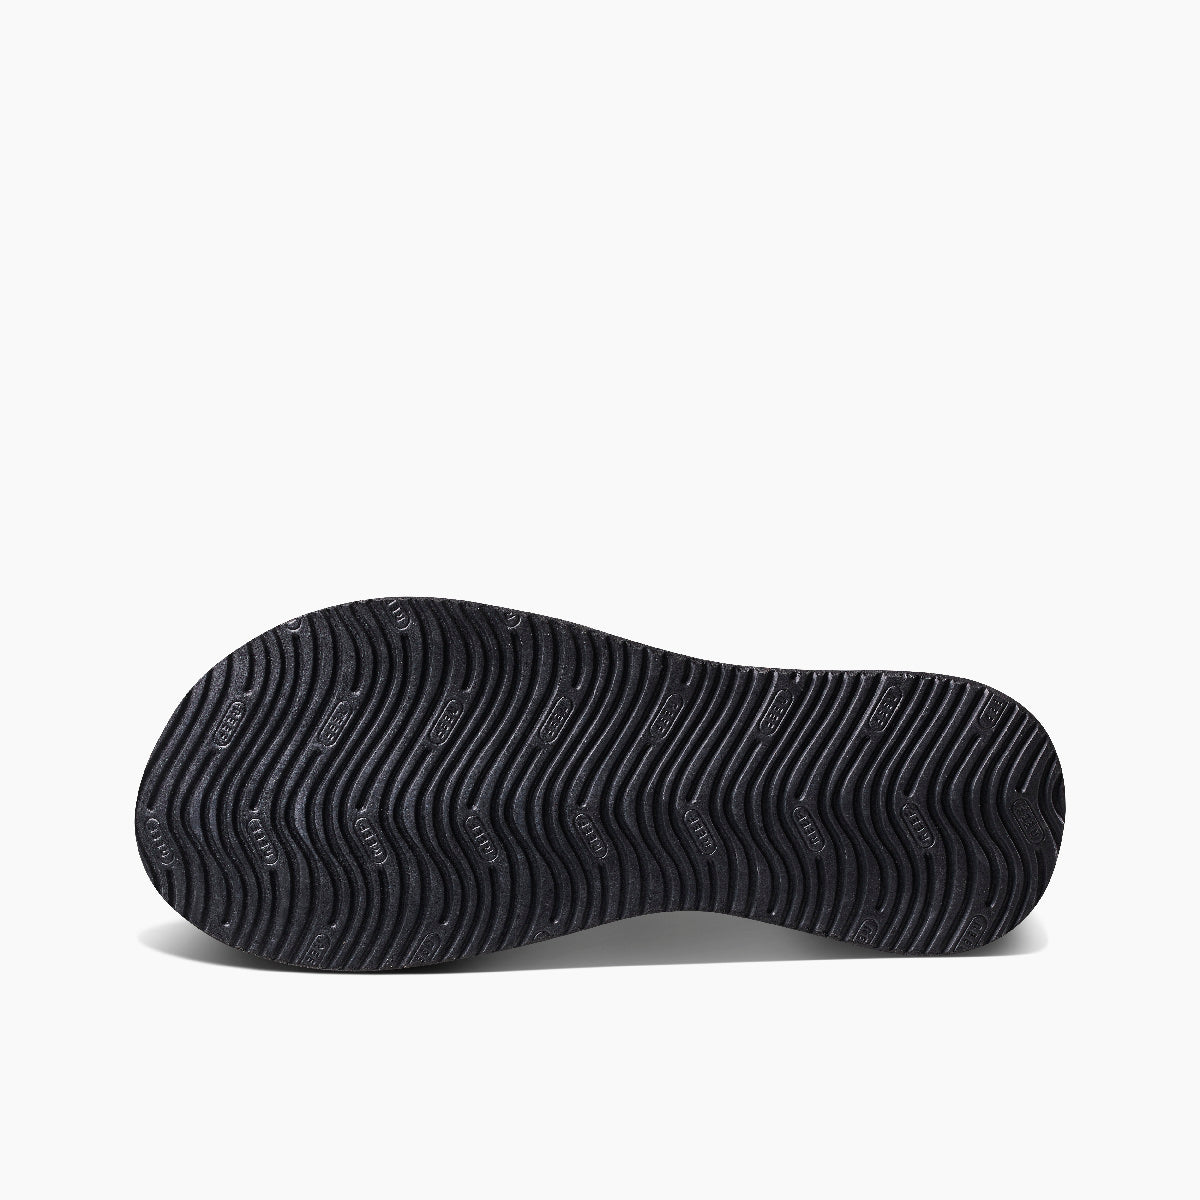 Reef Cushion Phantom 2.0 LE Mens Sandals Leather Strap - Black Mens Footwear